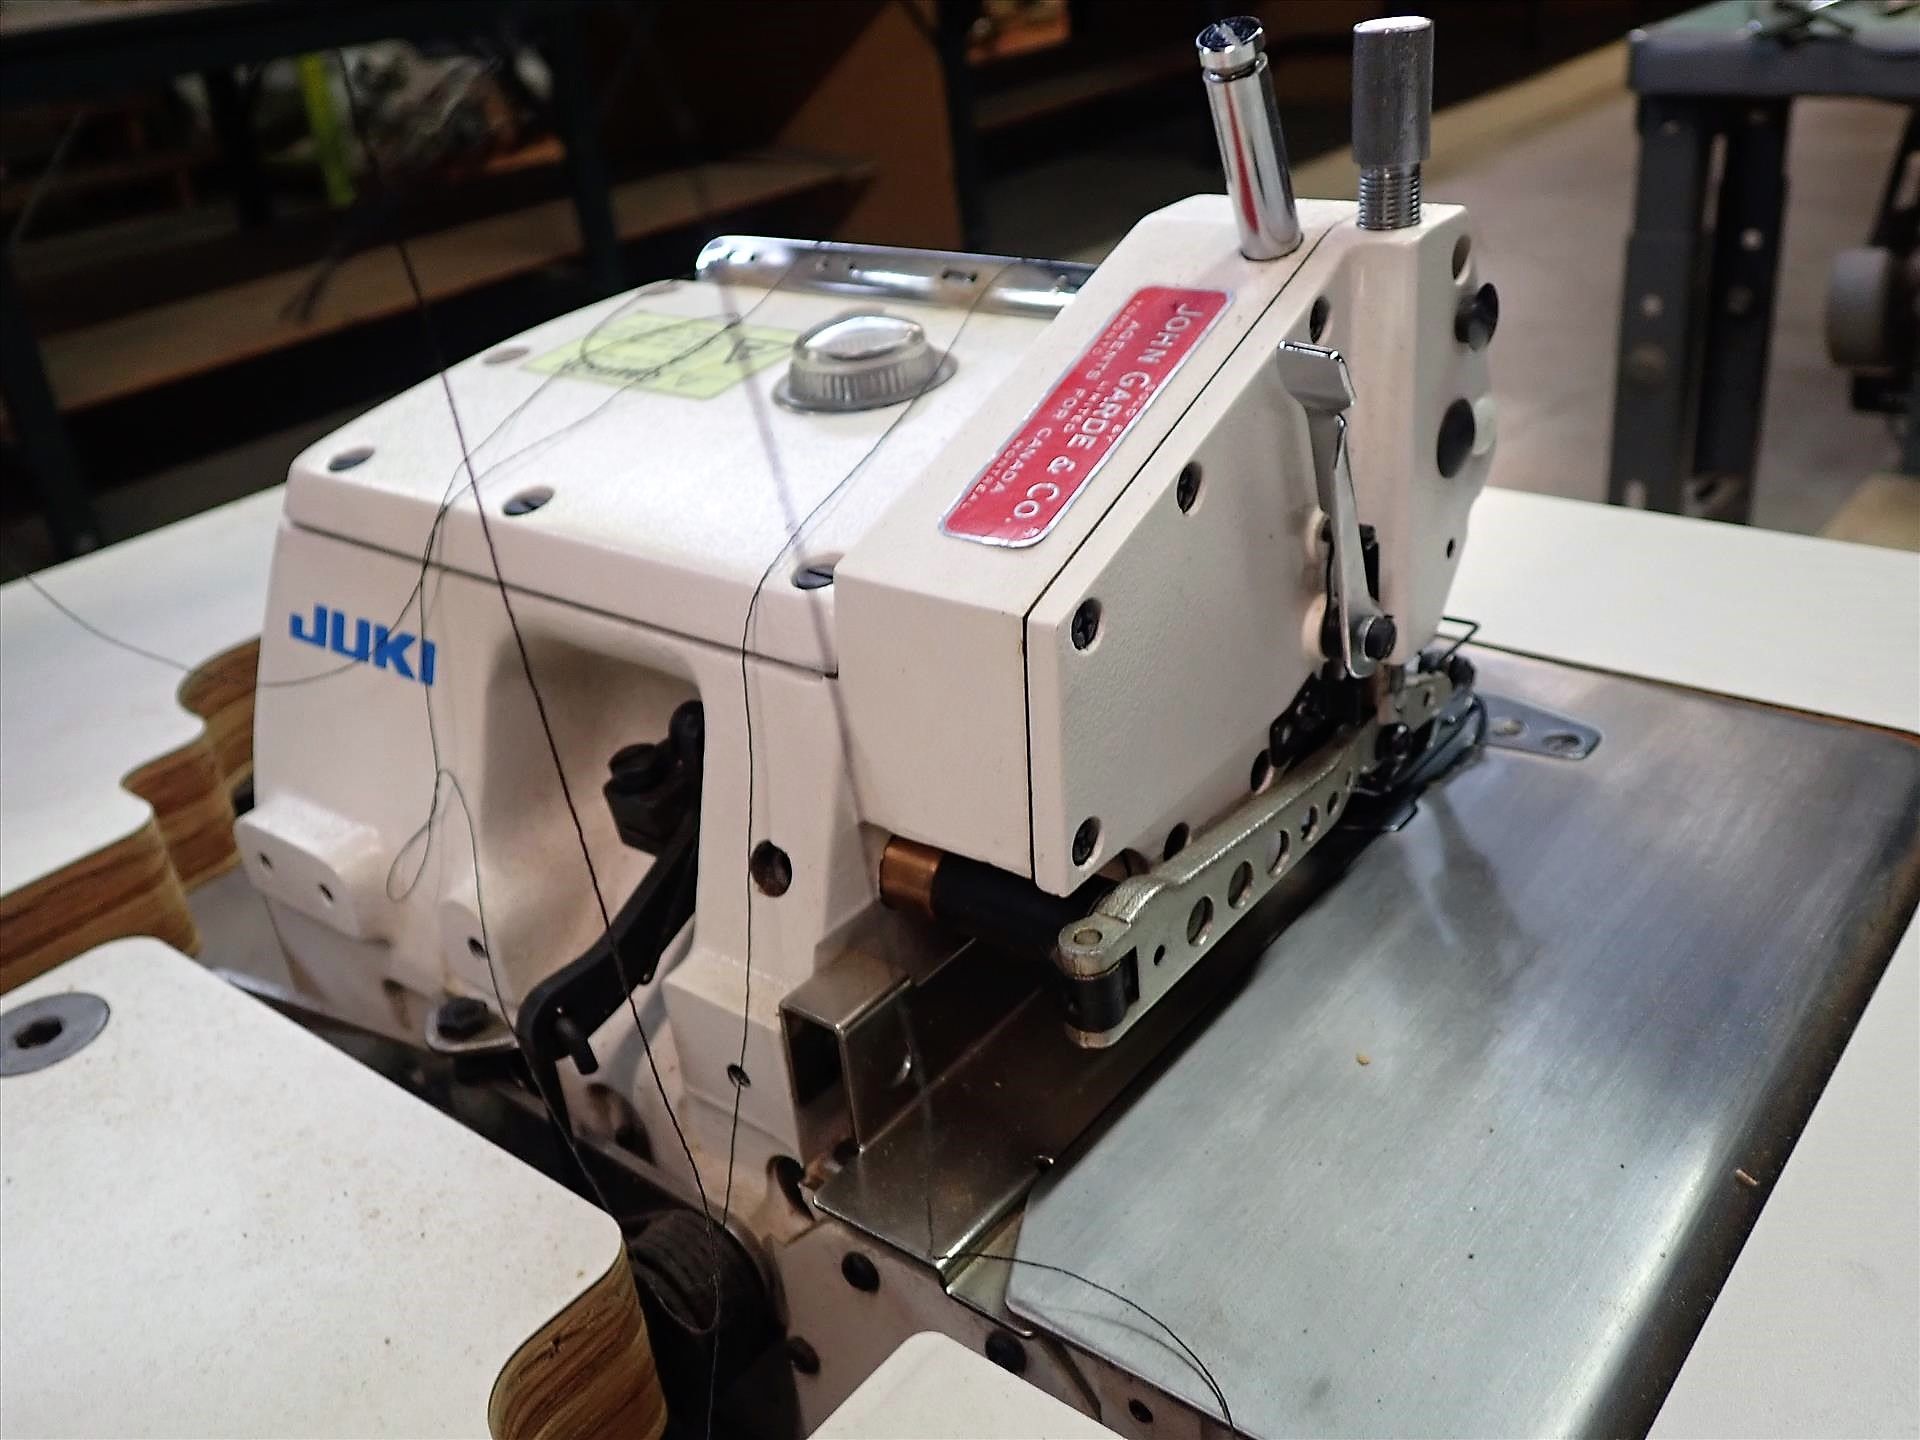 Juki industrial overlock sewing machine, mod. MO-3314E, S/N 5MOTG17905 c/w 20 in. x 48 in. - Image 3 of 6